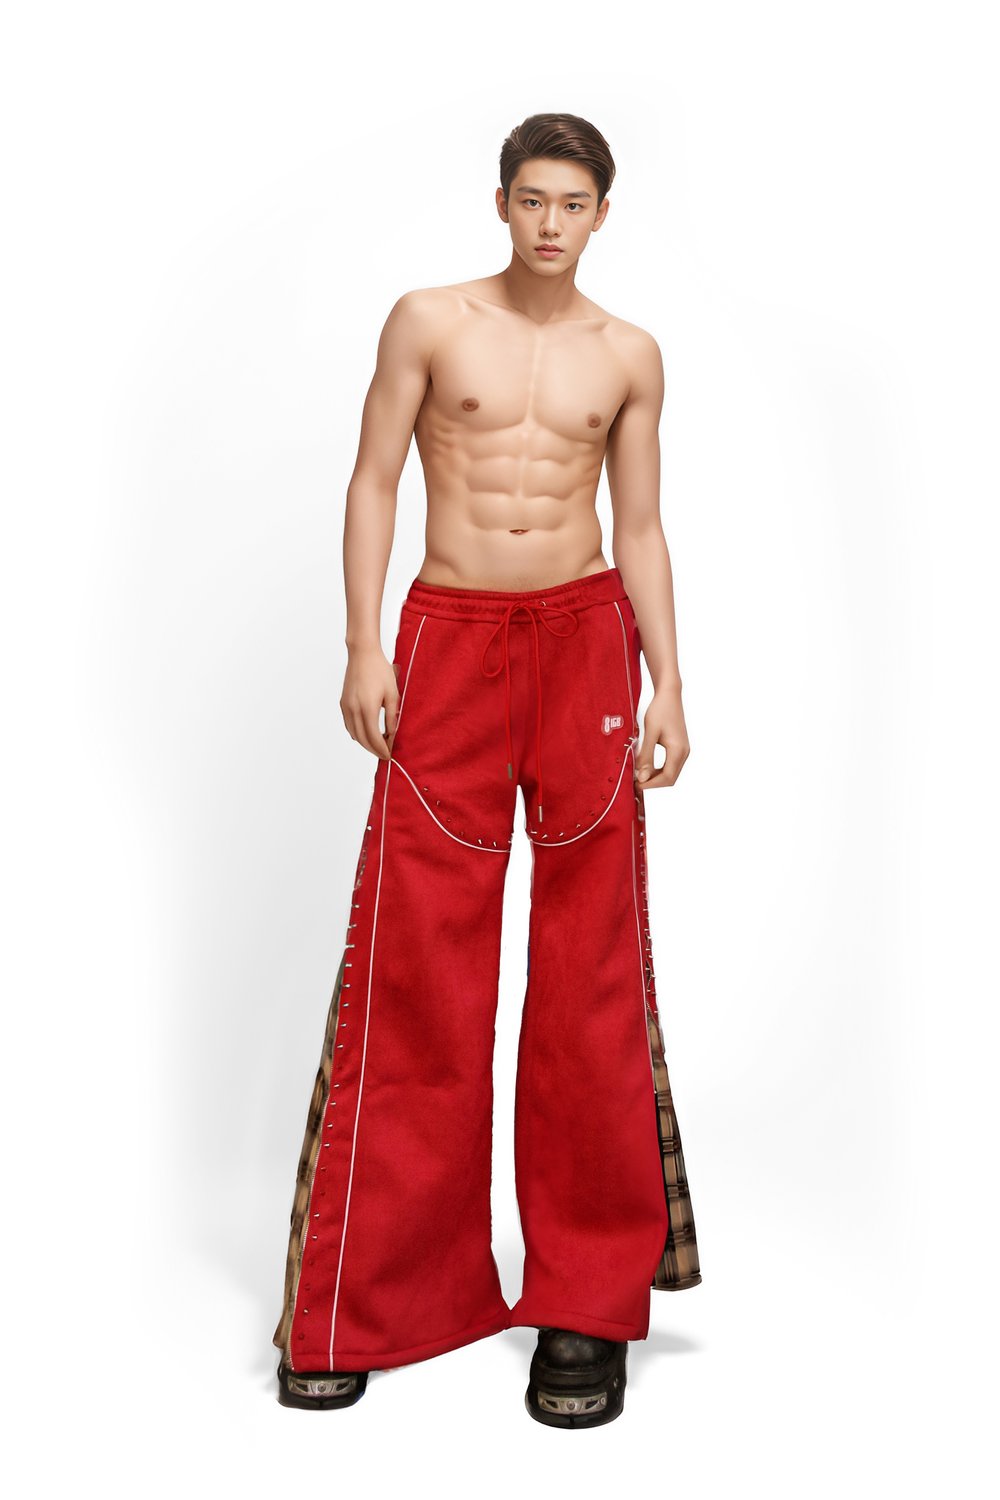 PLAID TRACKSUIT pants red